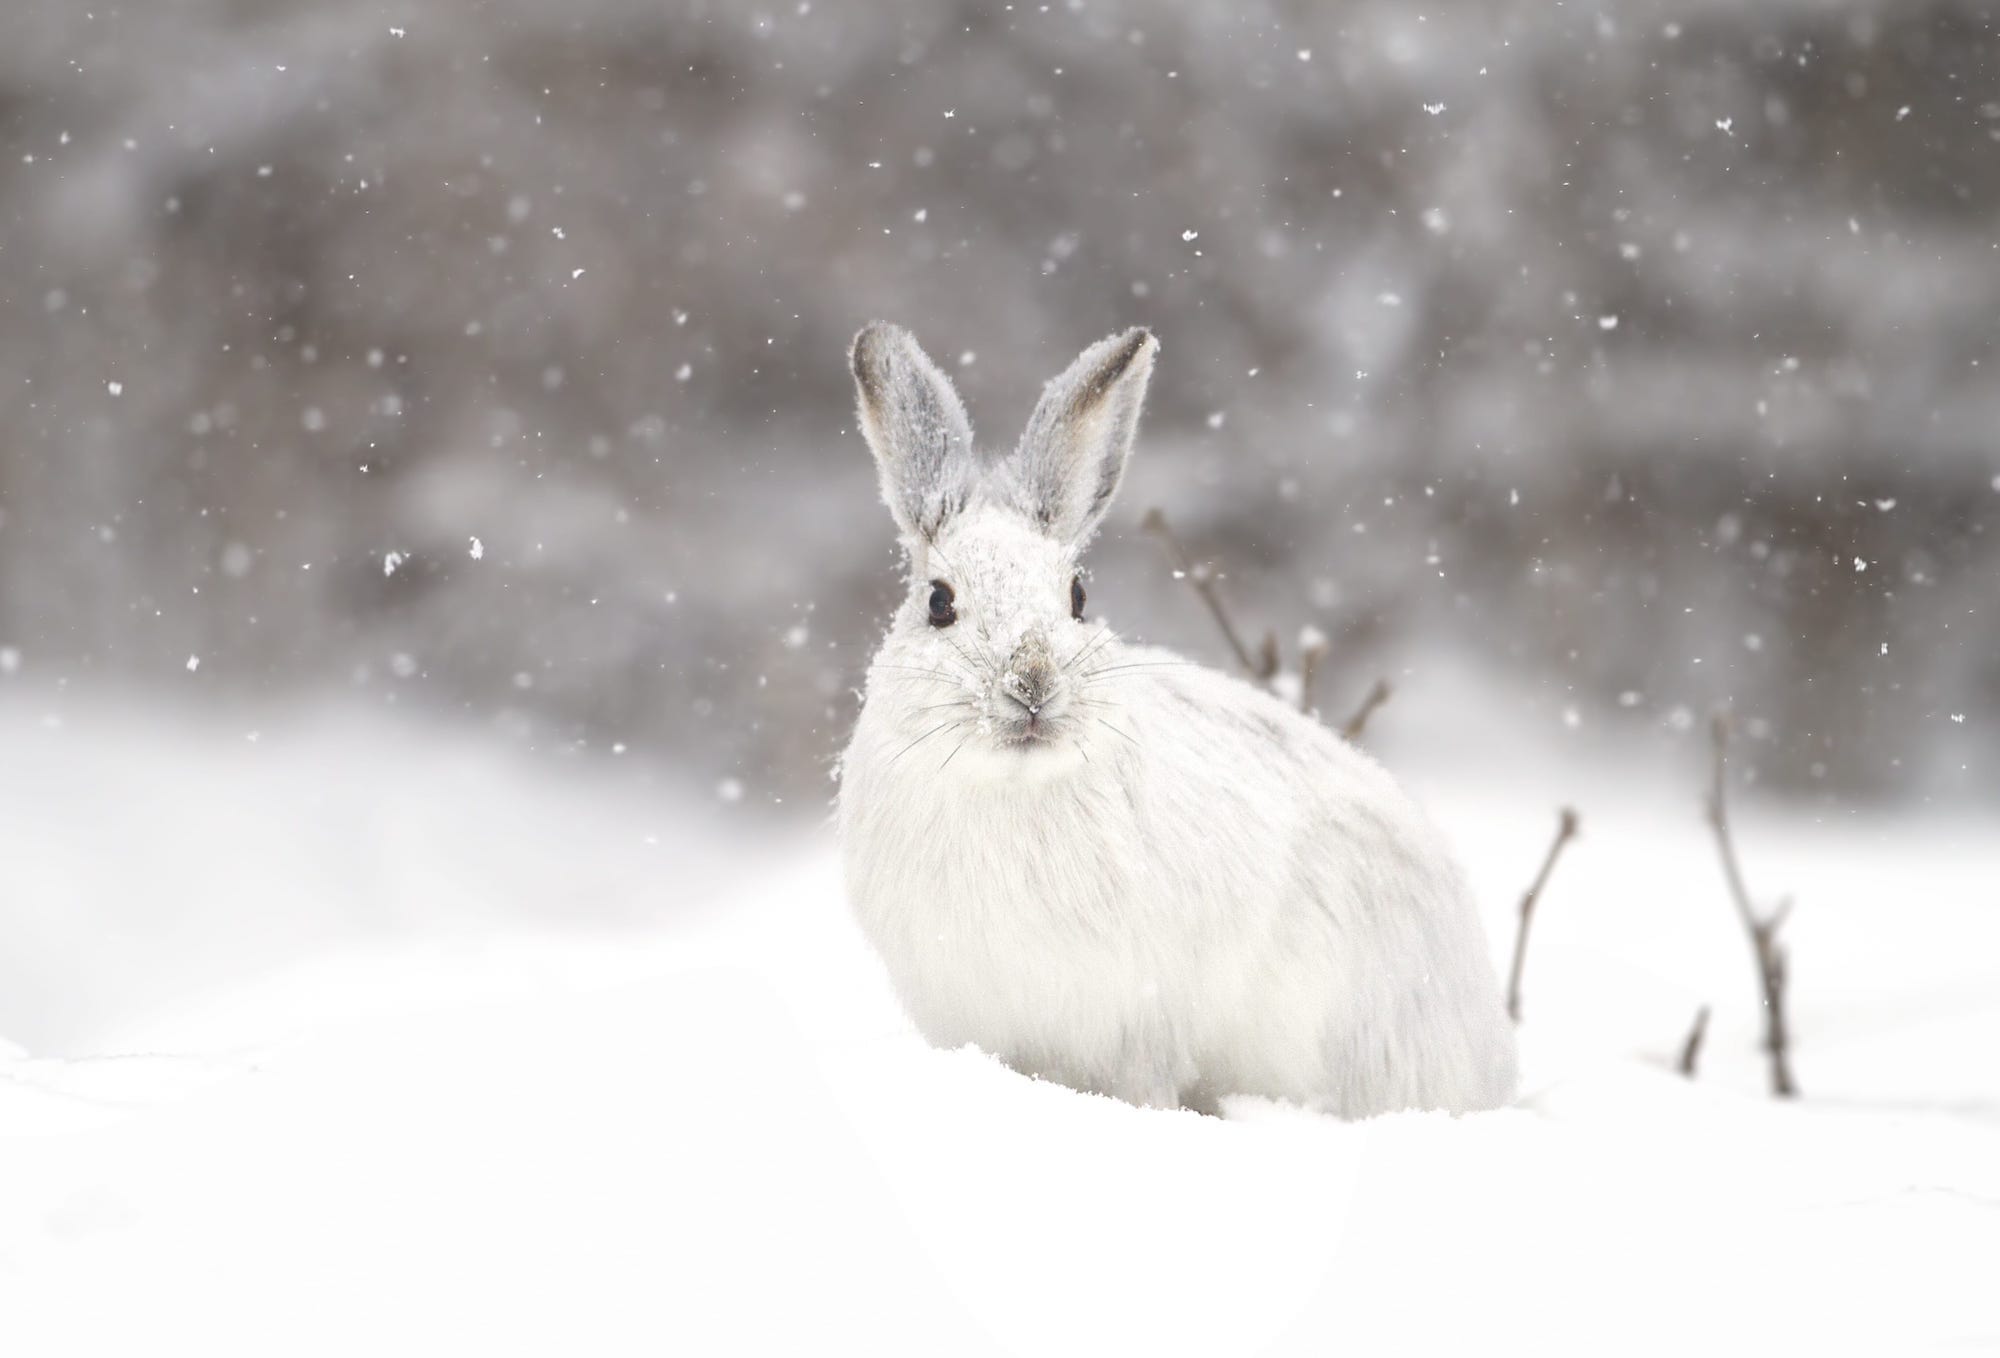 Image shows wild rabbit in snow.